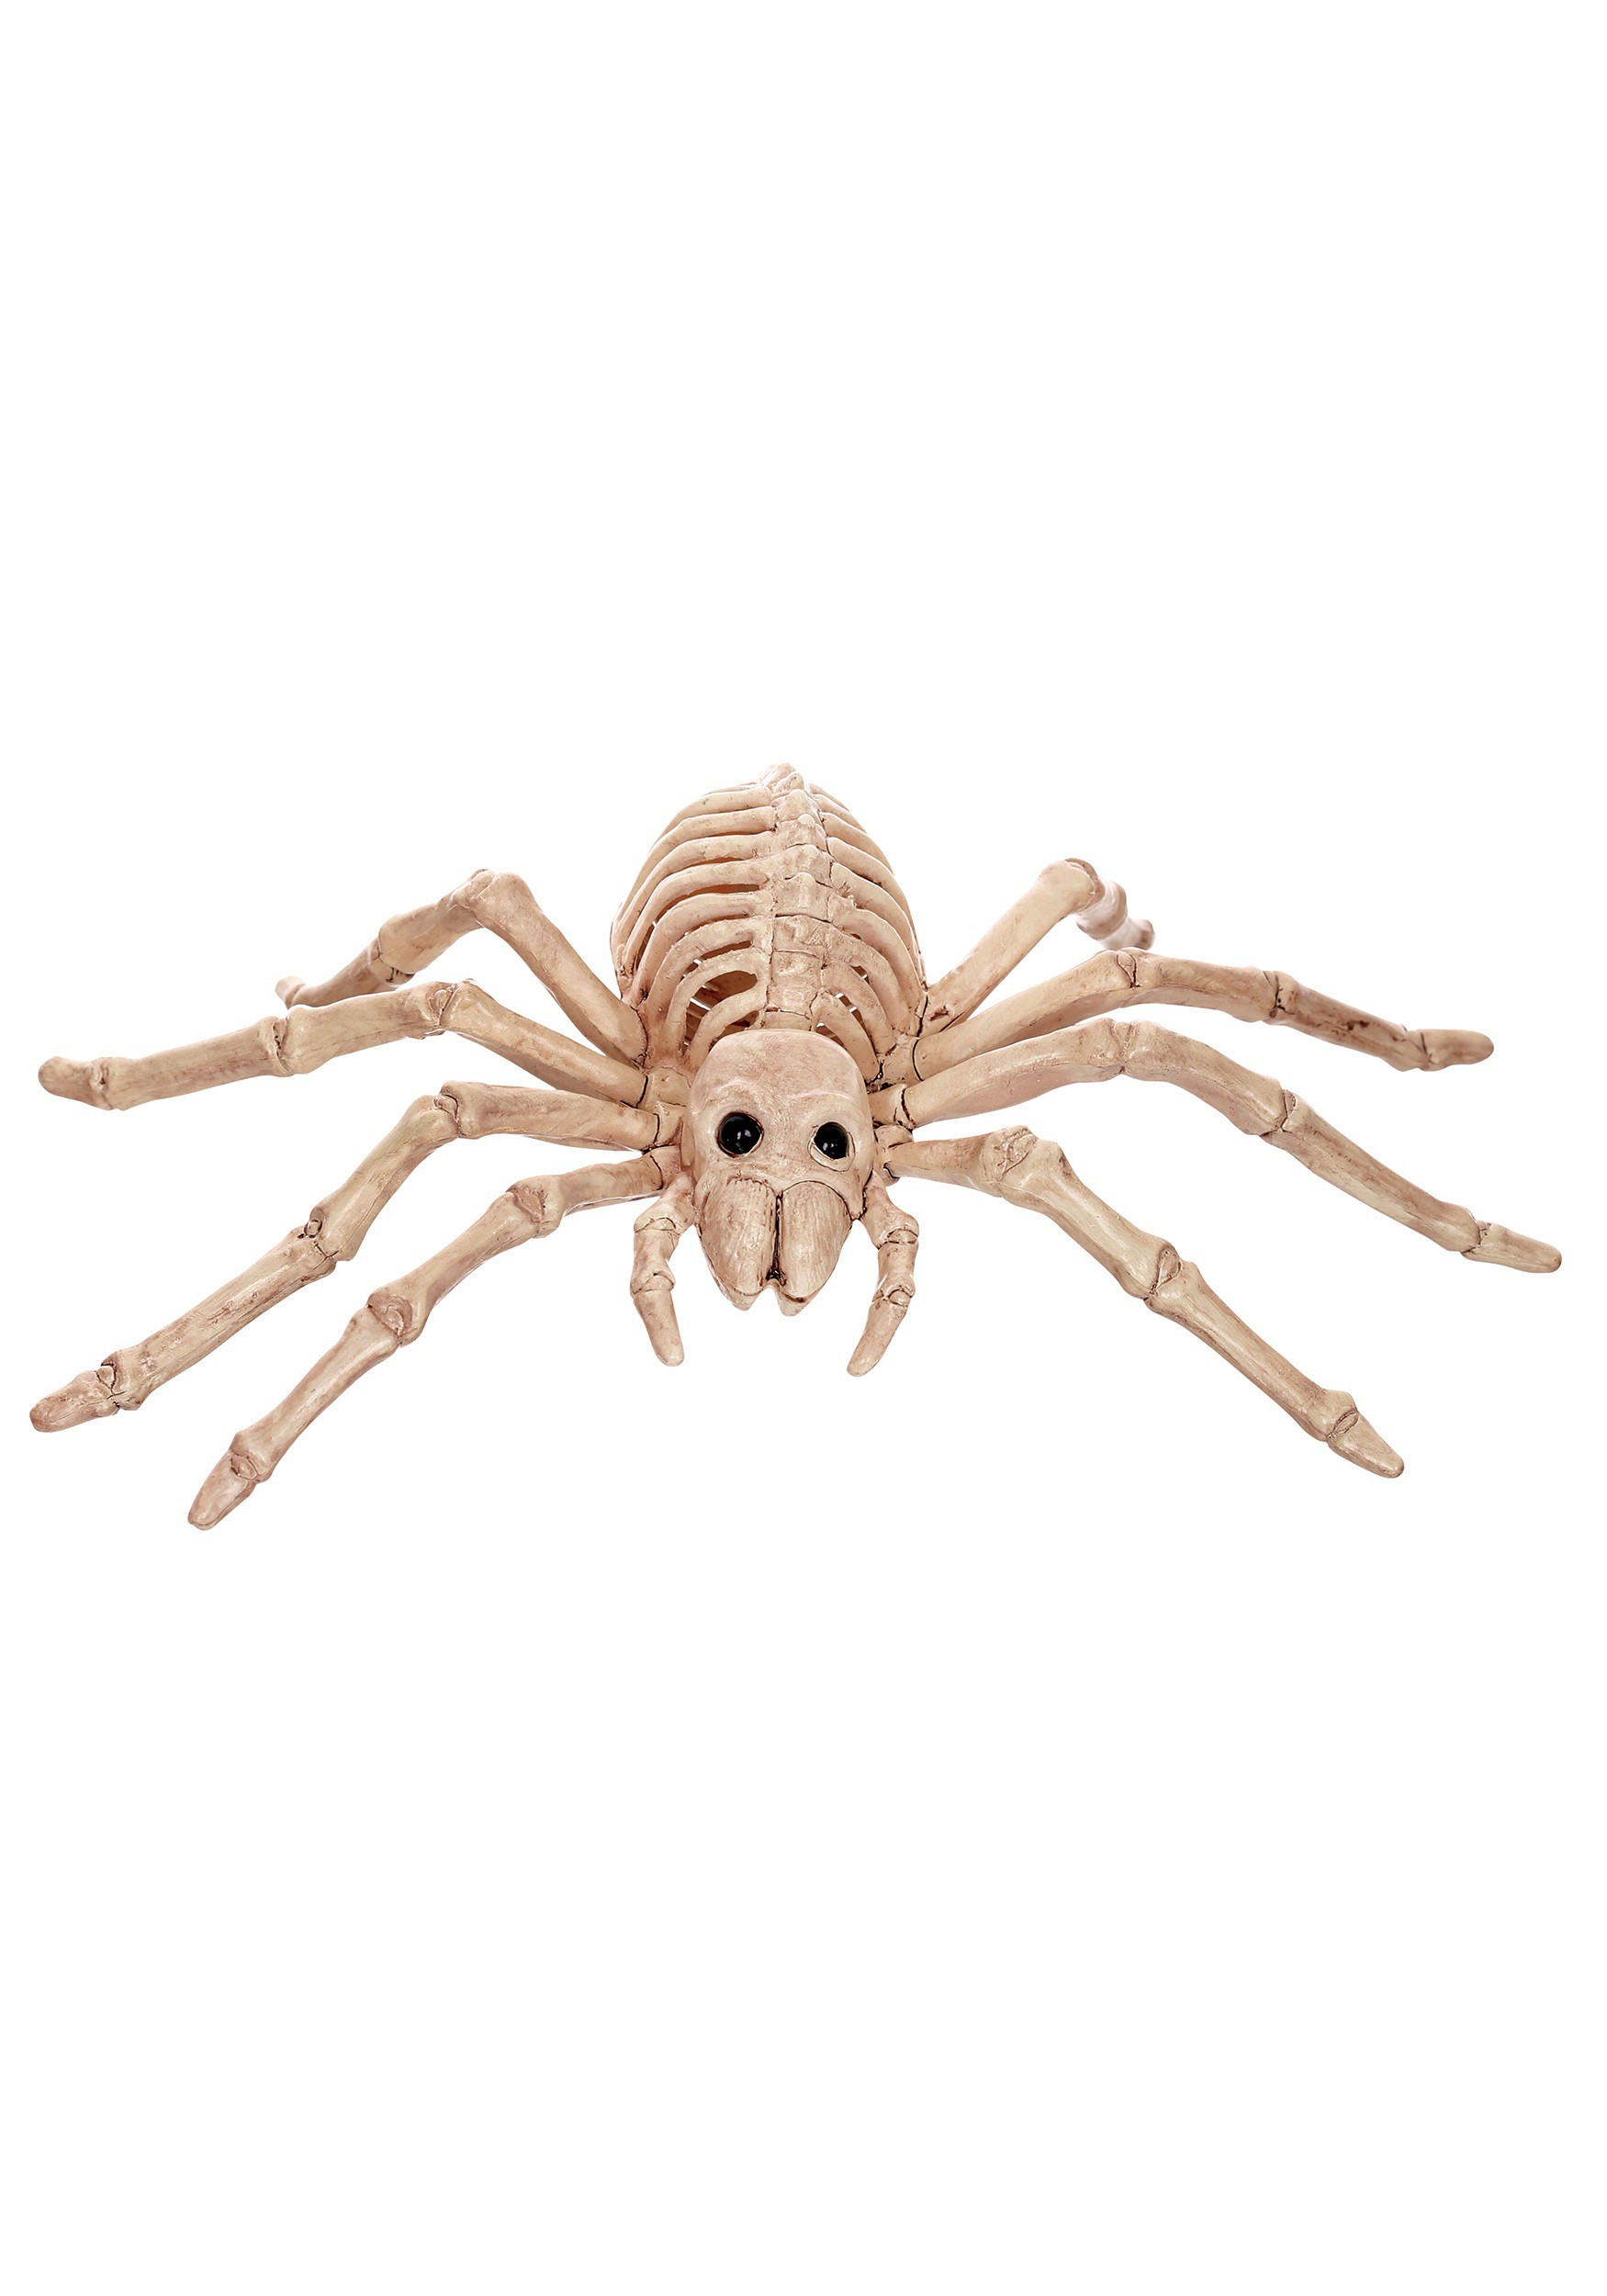 Mini Skeleton Spider Prop